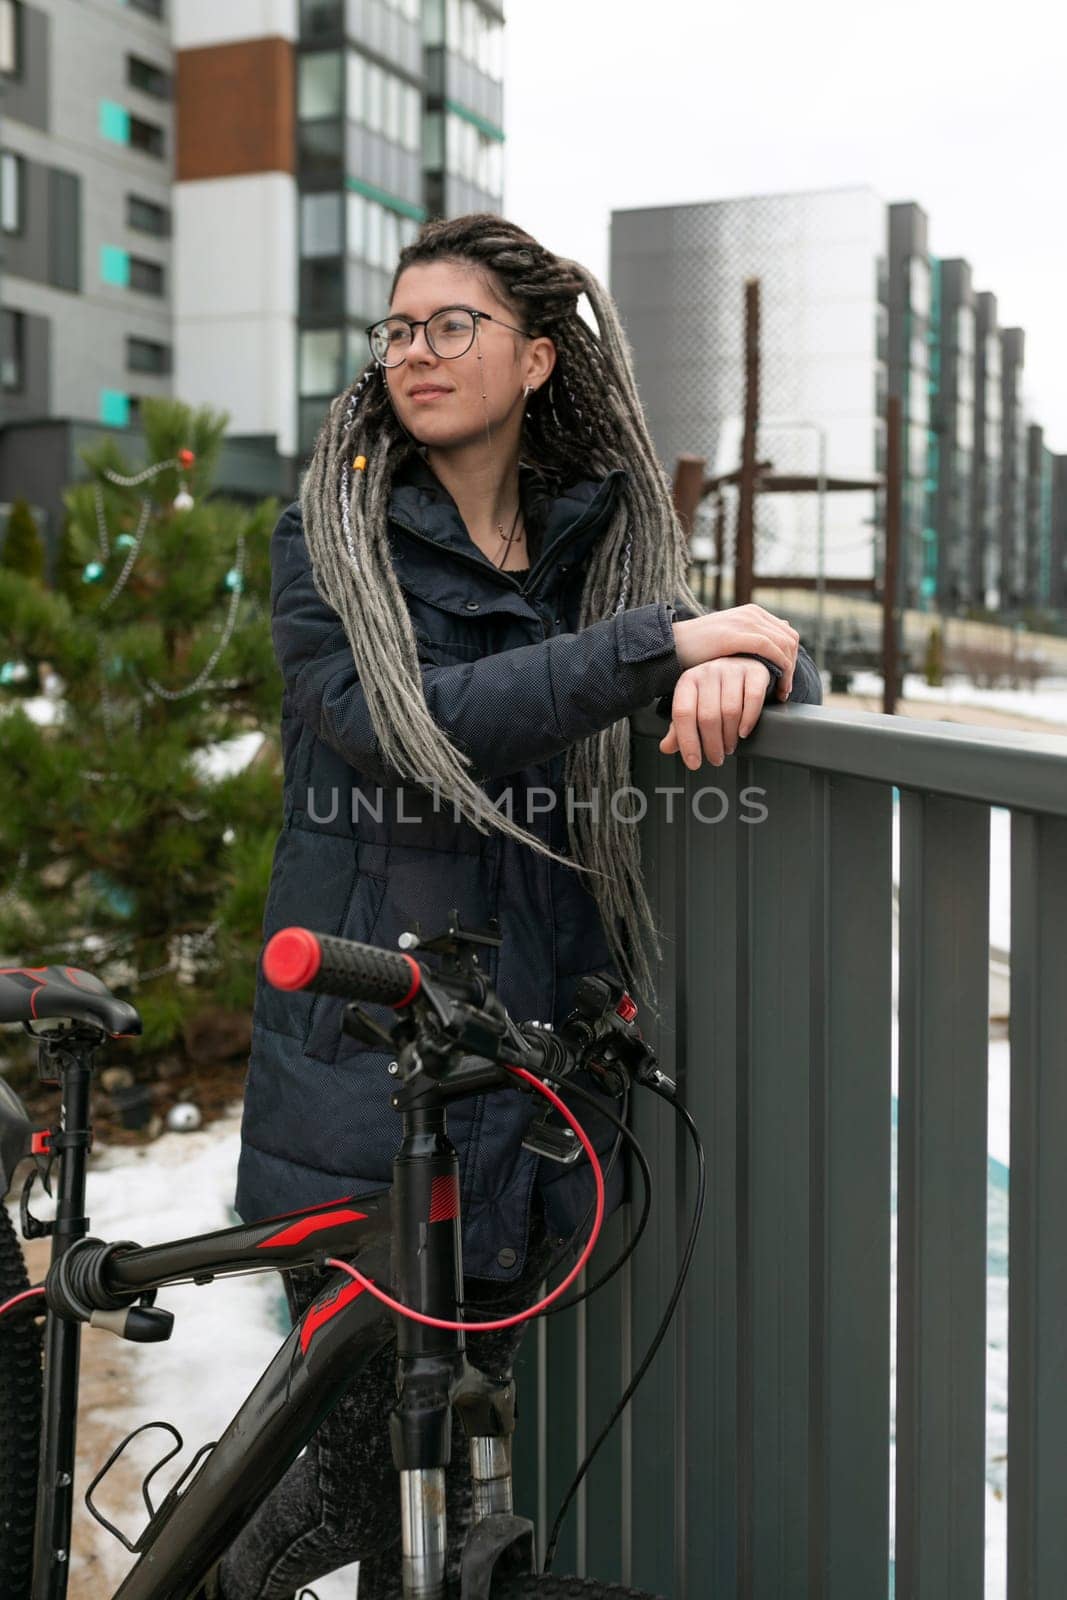 Bike rental concept, young european woman riding a bike around the city.